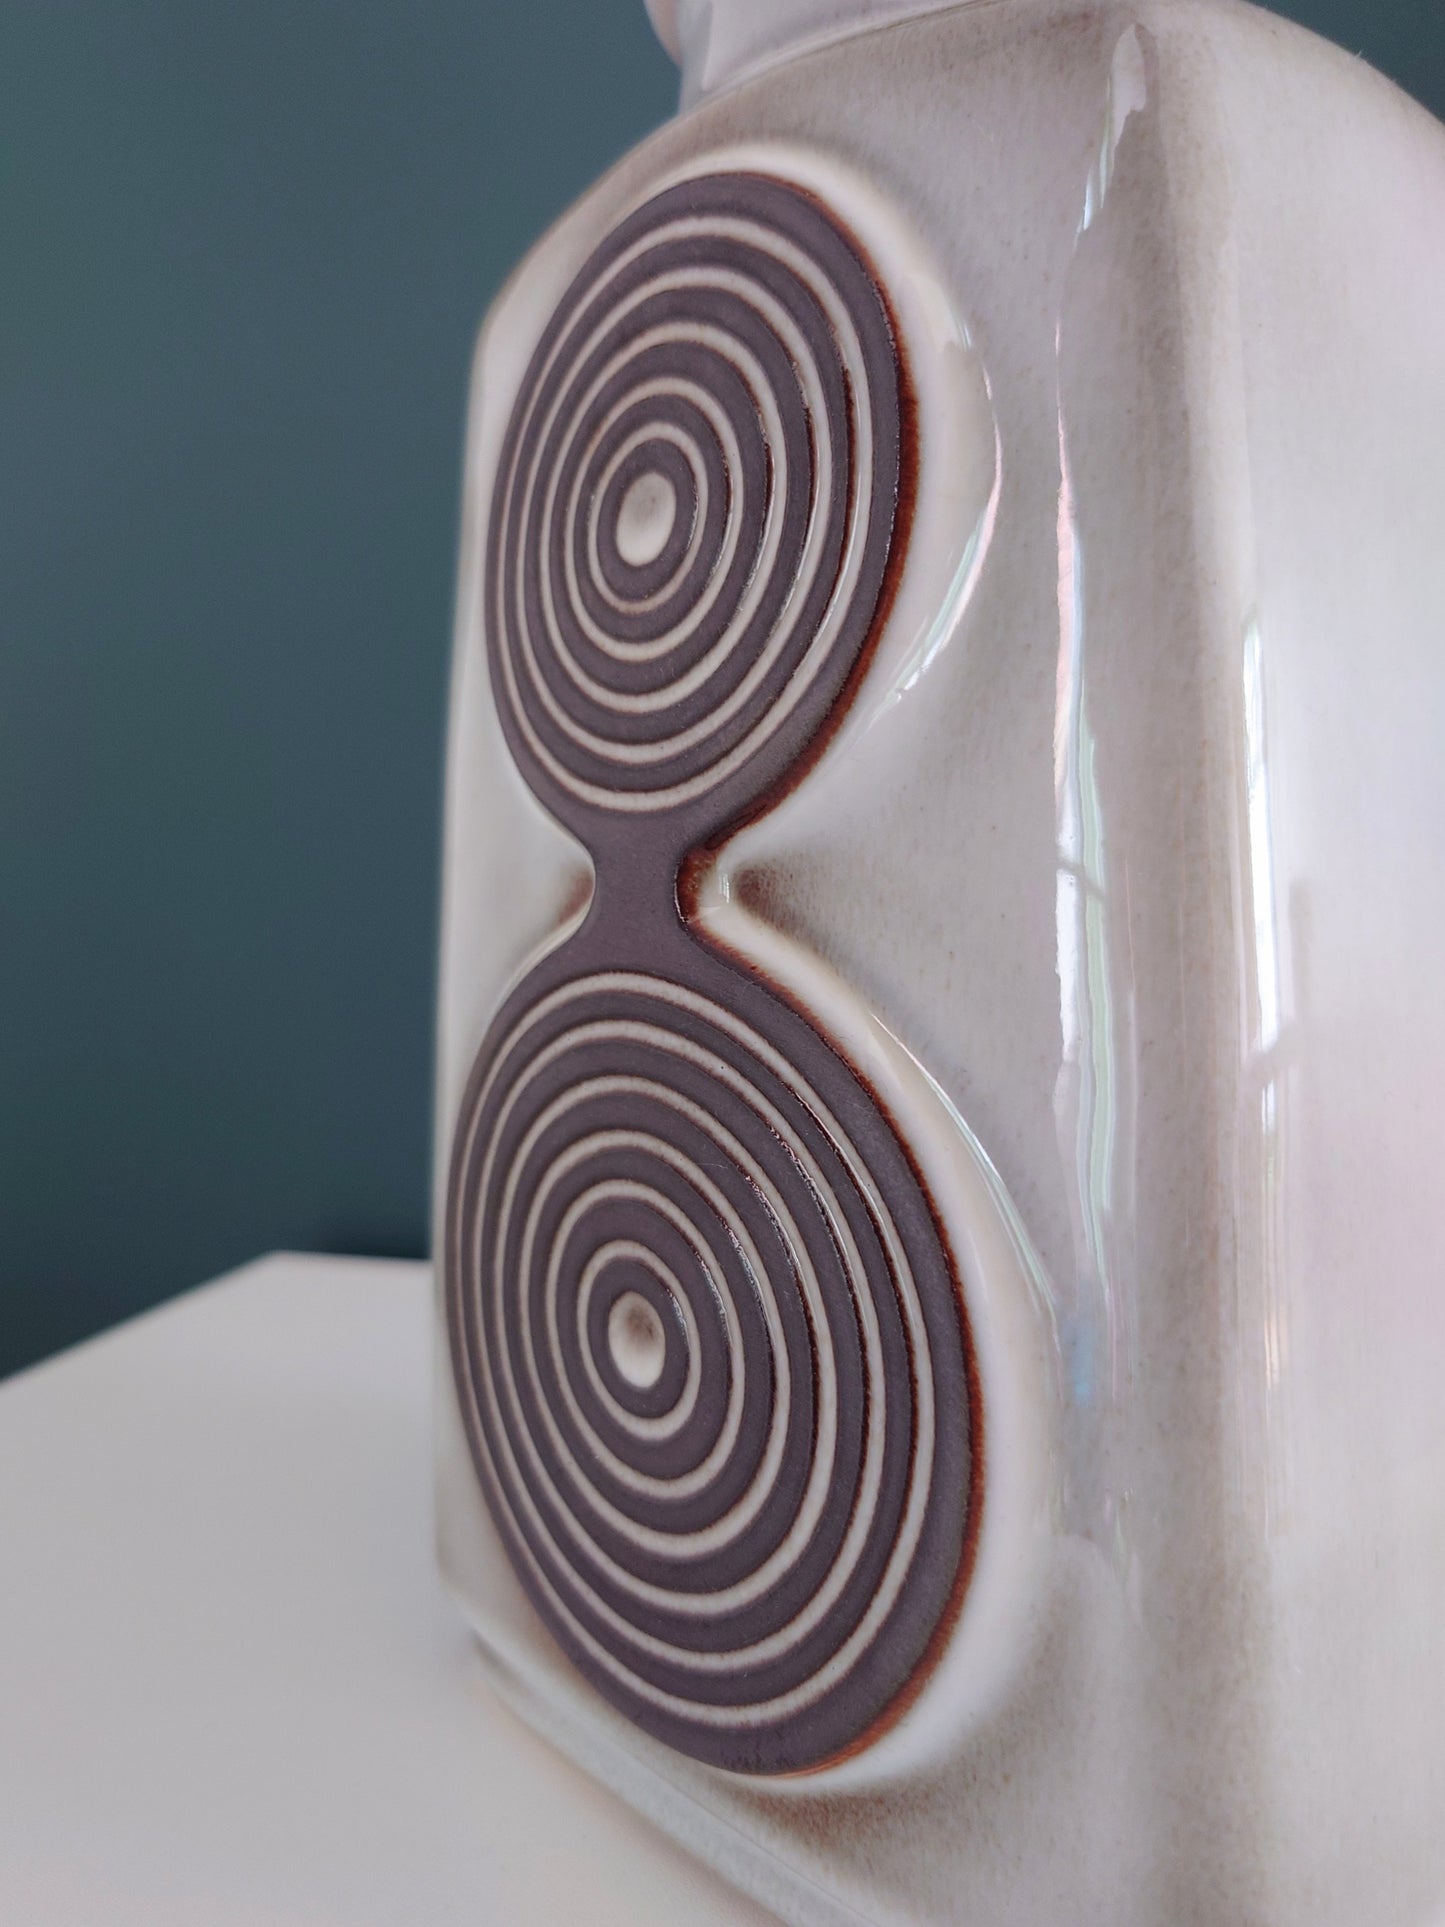 Soholm Pottery Ivory Danish Ceramic Vase Vintage 1960s Retro Scandinavian